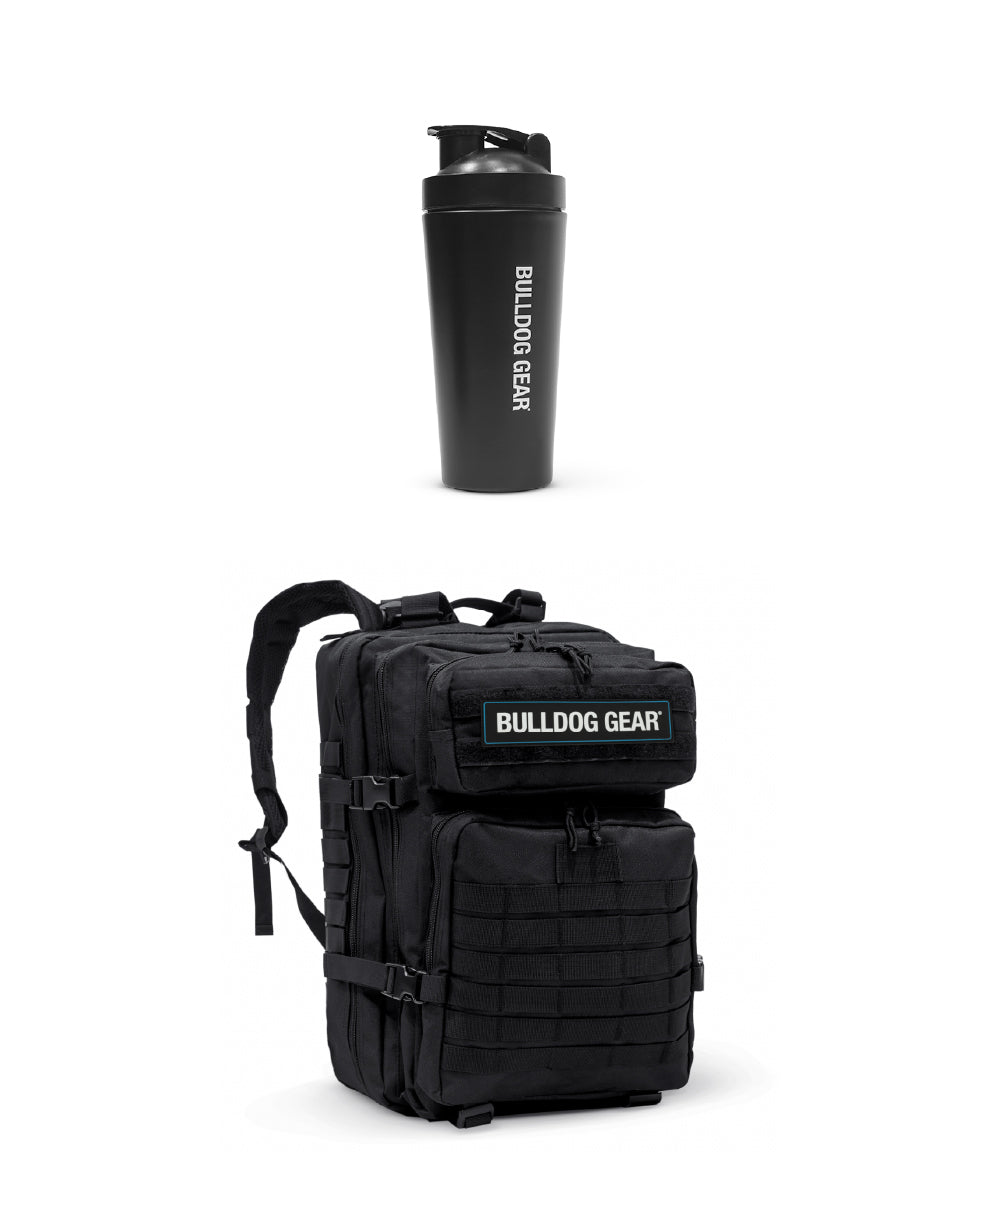 Bulldog gear tactical backpack and shaker bundle